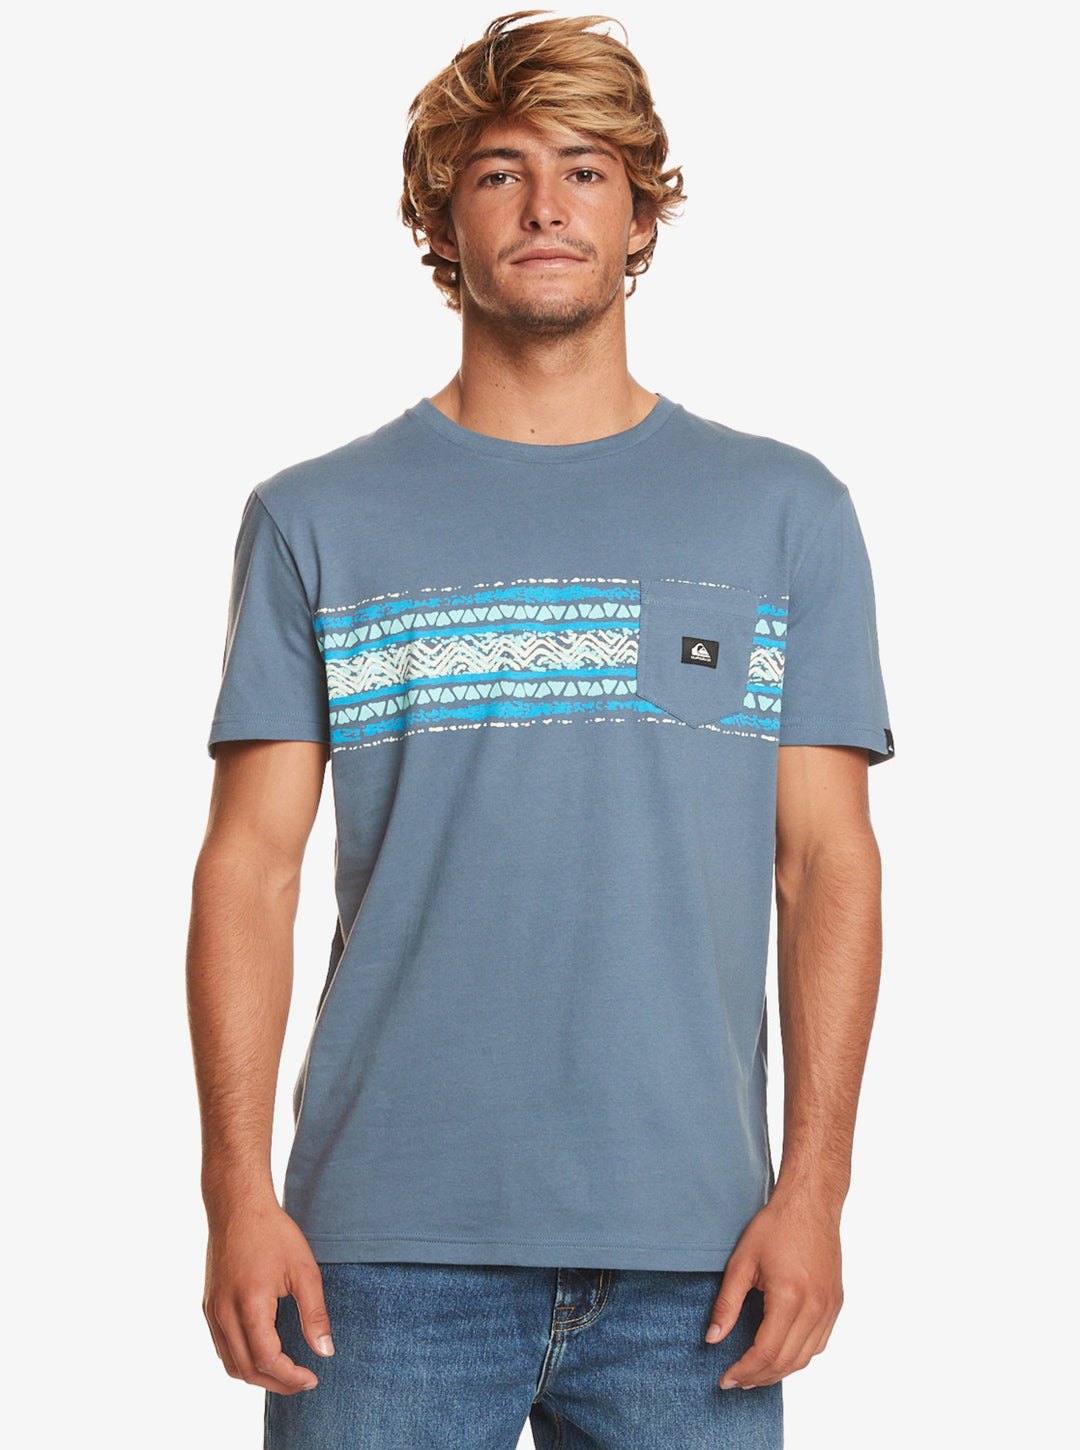 Quiksilver Mesa Stripe Pocket T-Shirt - Bering Sea - Sun Diego Boardshop